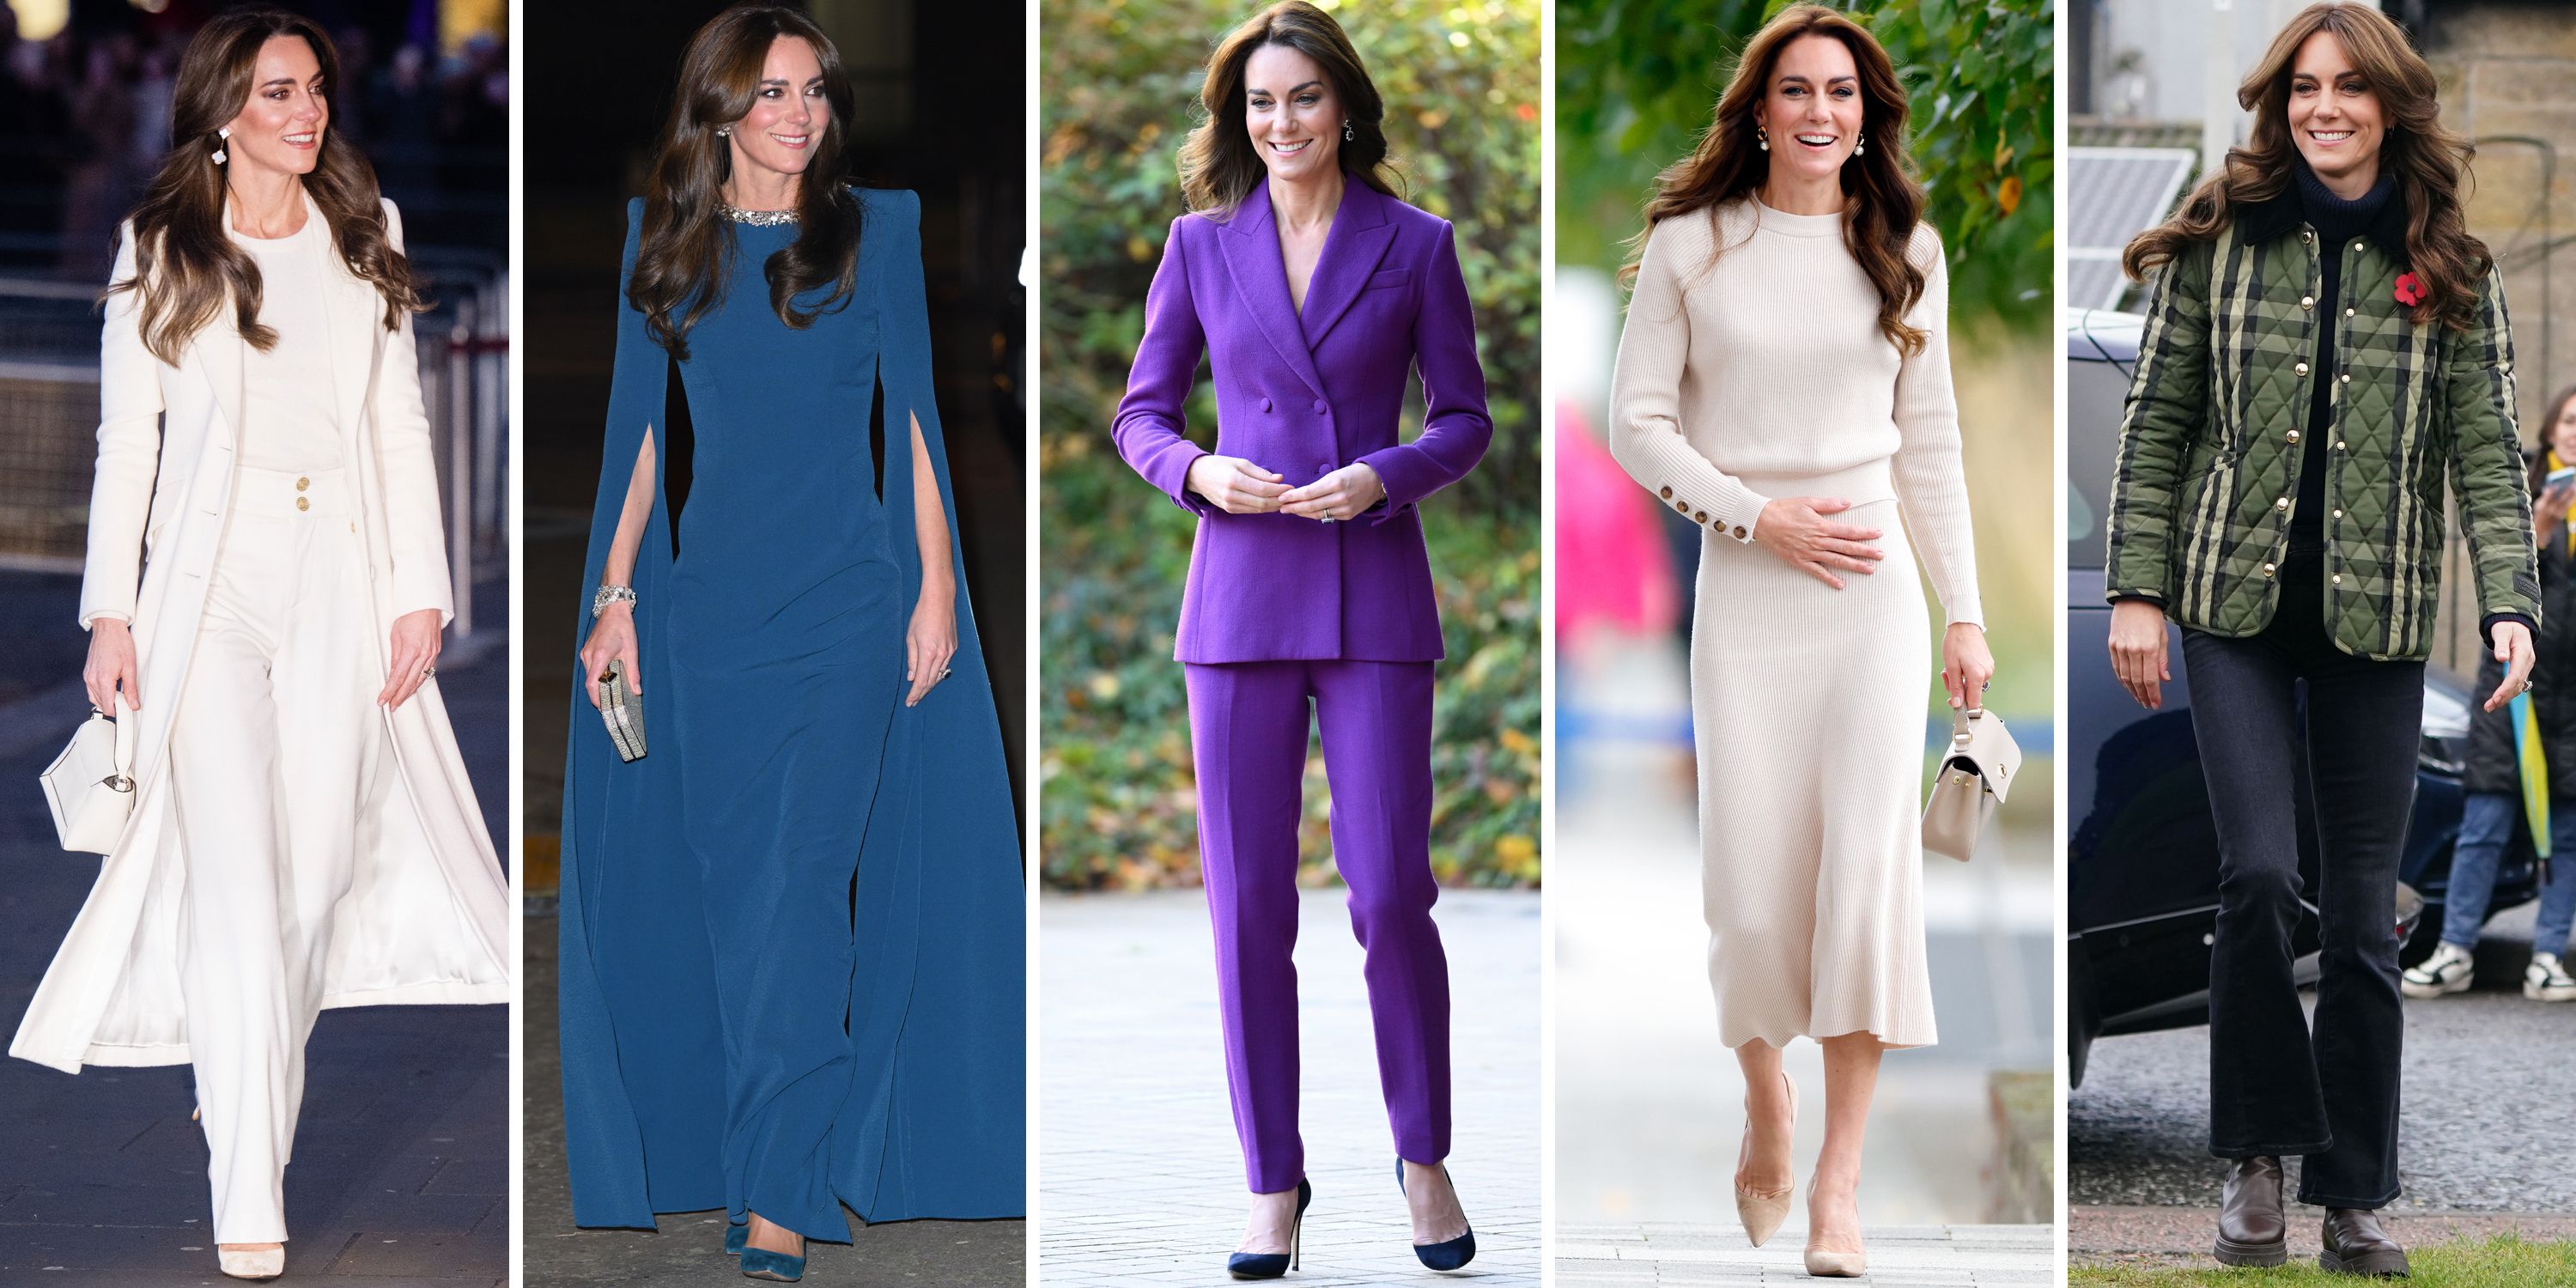 Kate Middleton's Dress Is Pretty Risqué